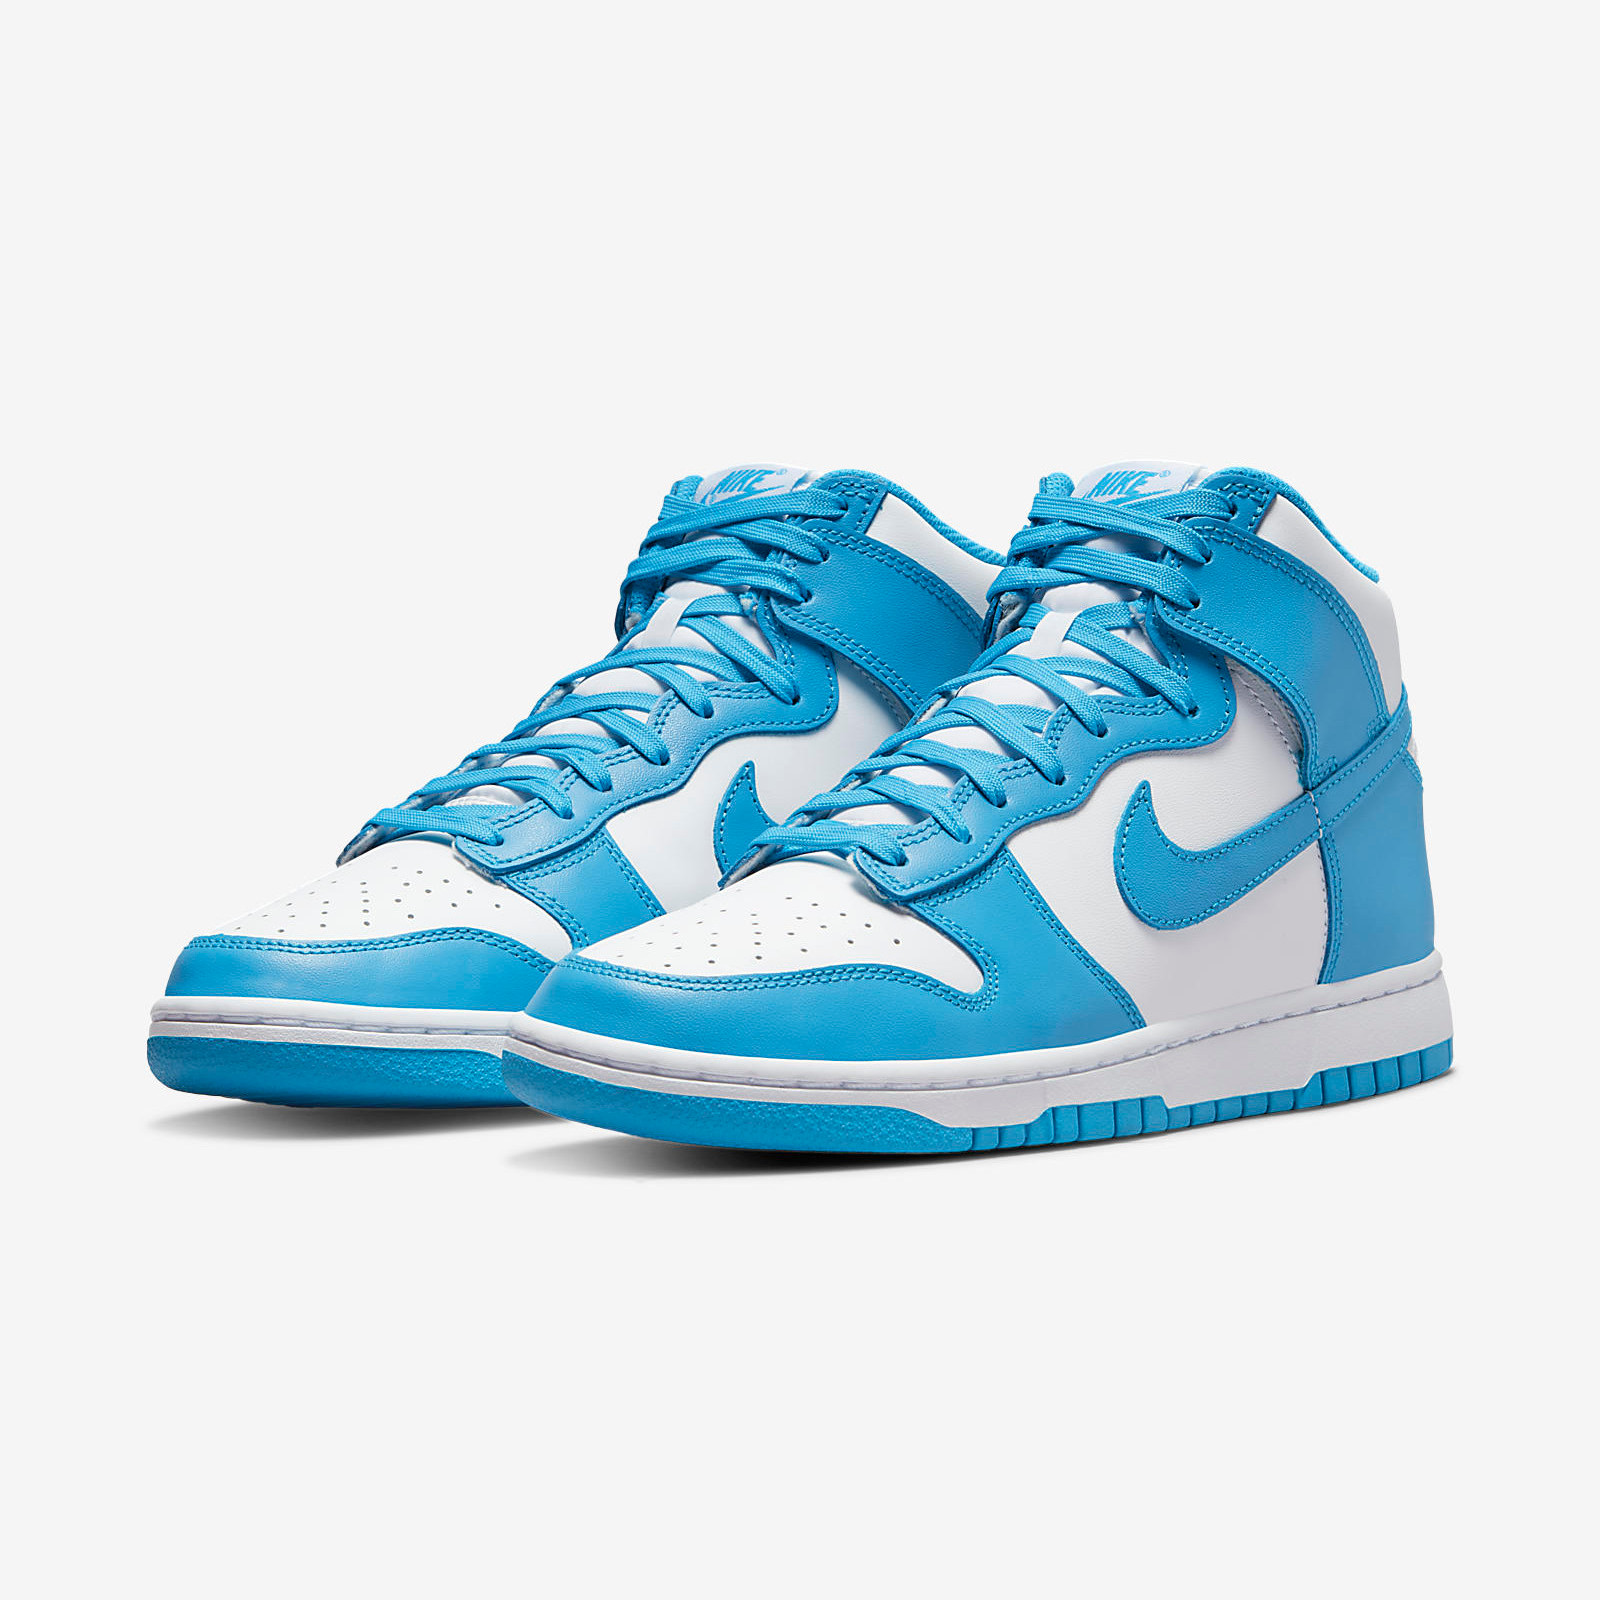 Nike Dunk High
« Laser Blue »